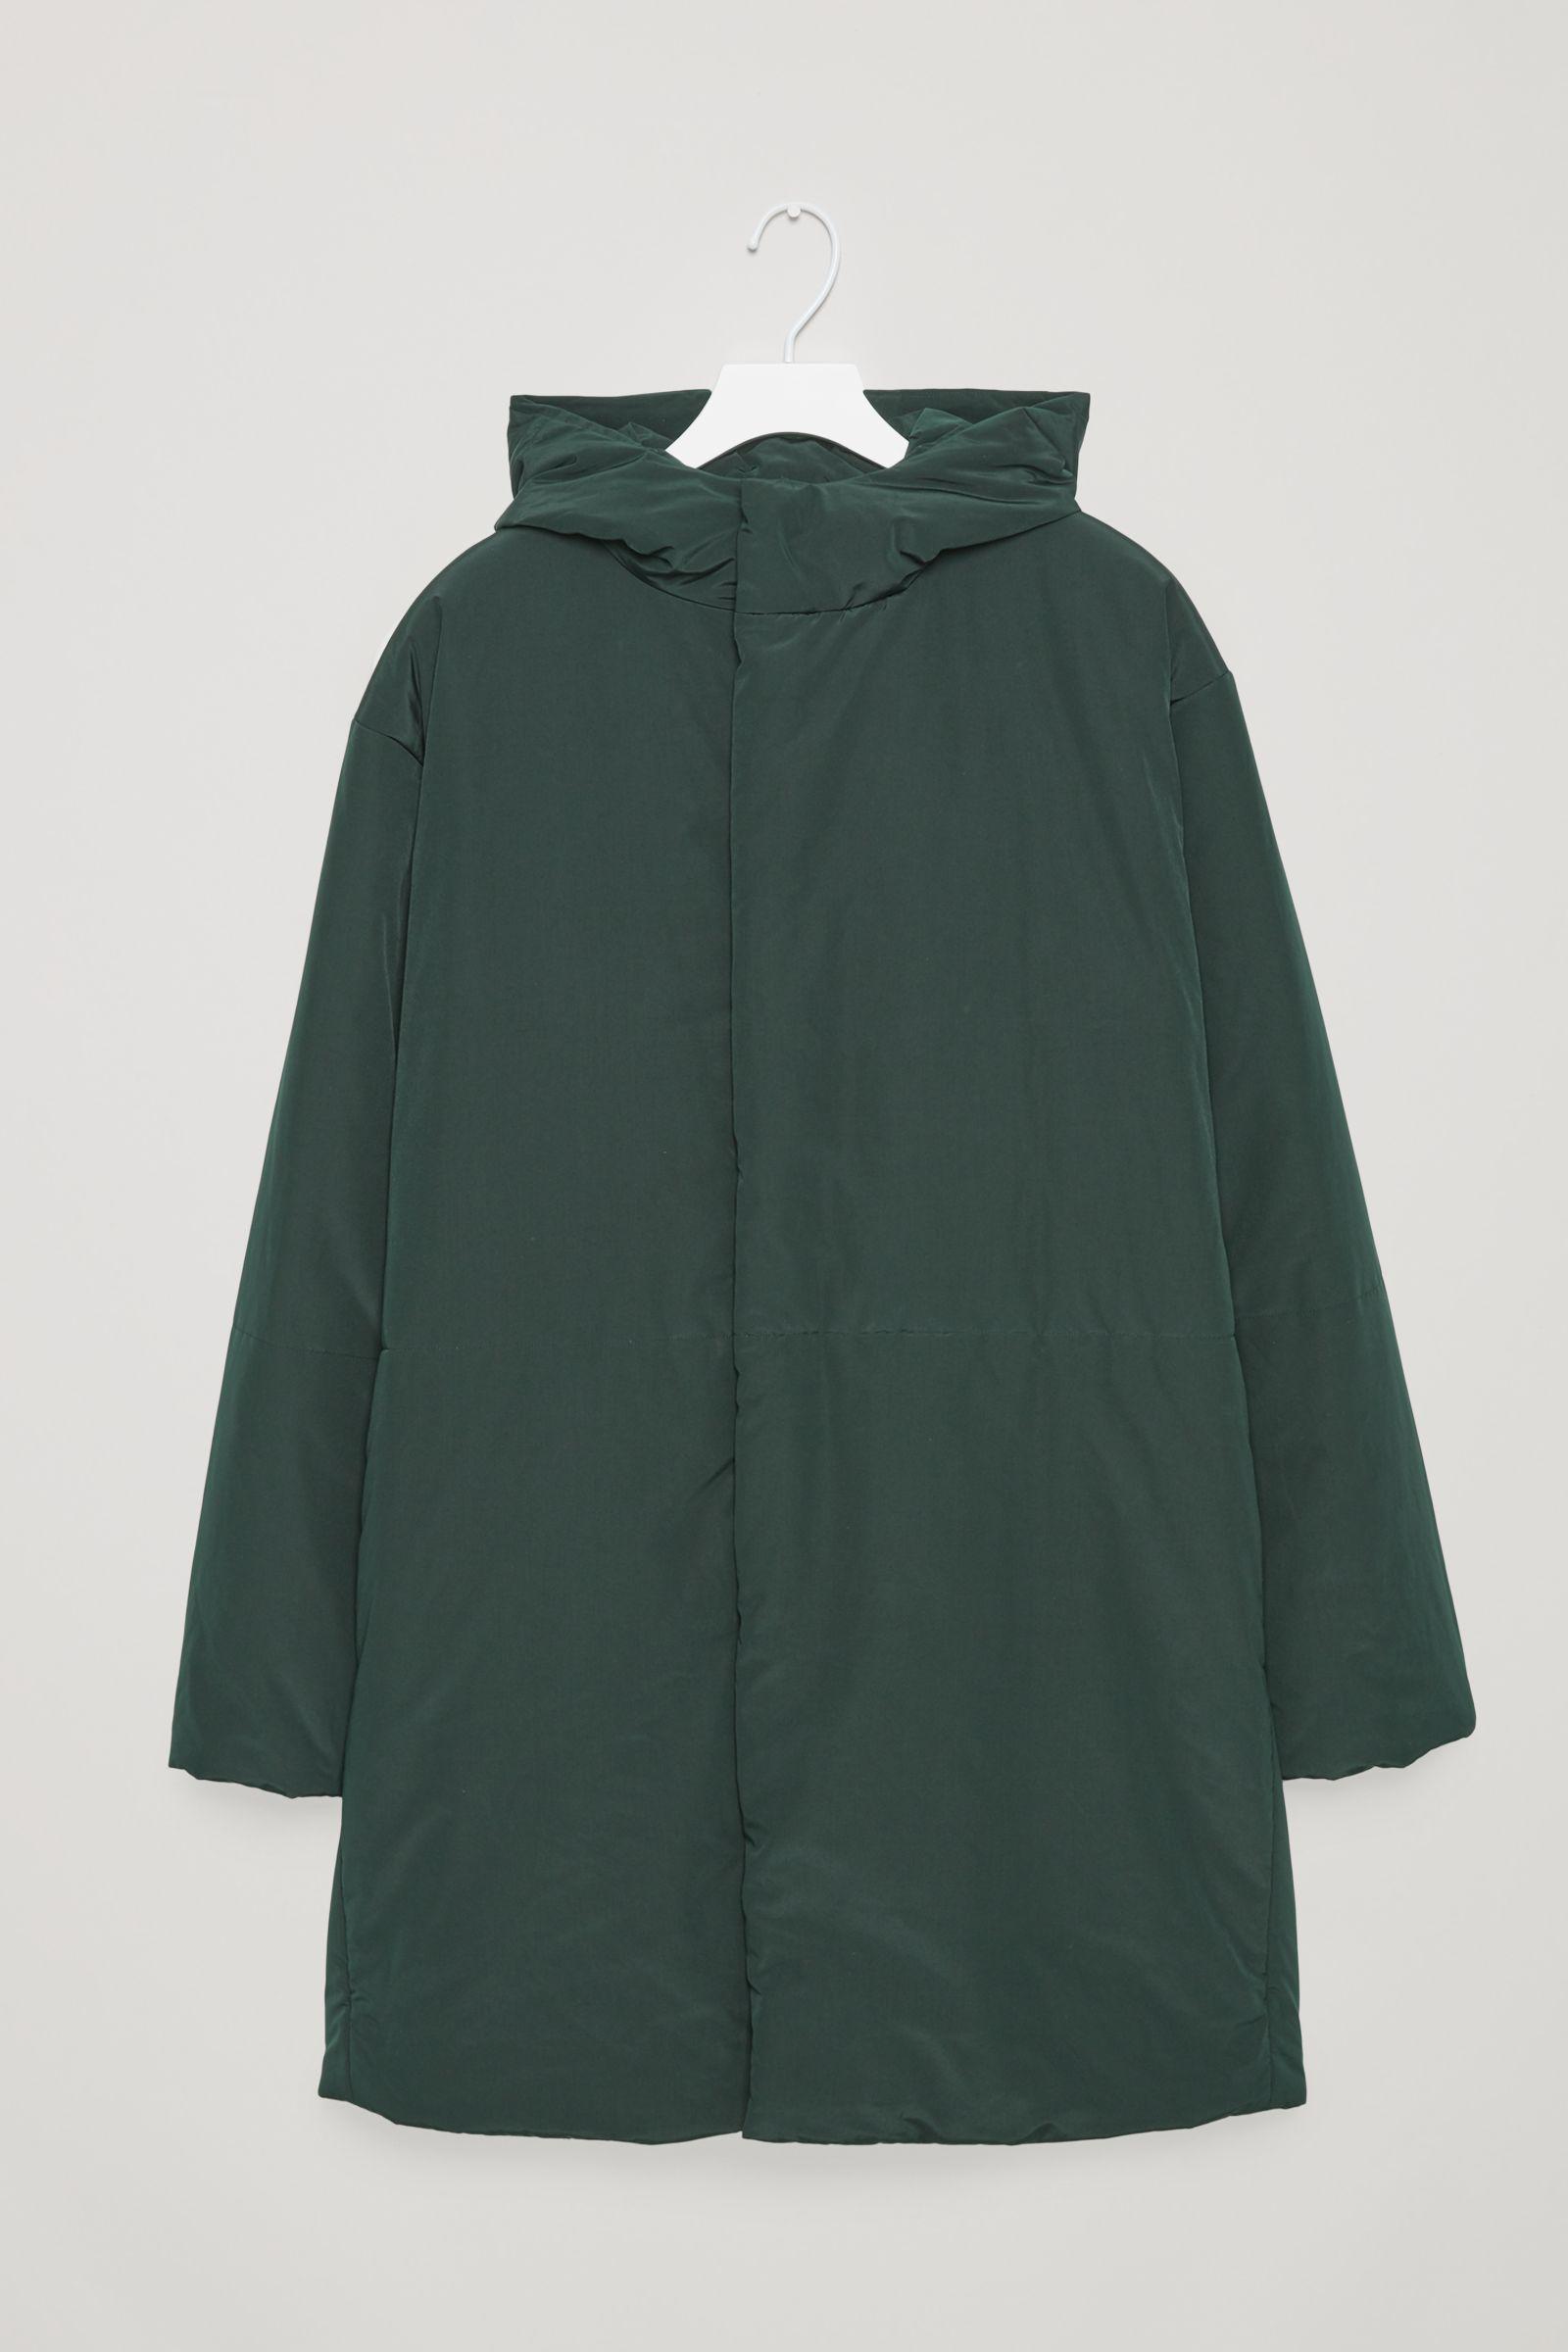 Lyst - COS Long Padded Coat in Green for Men